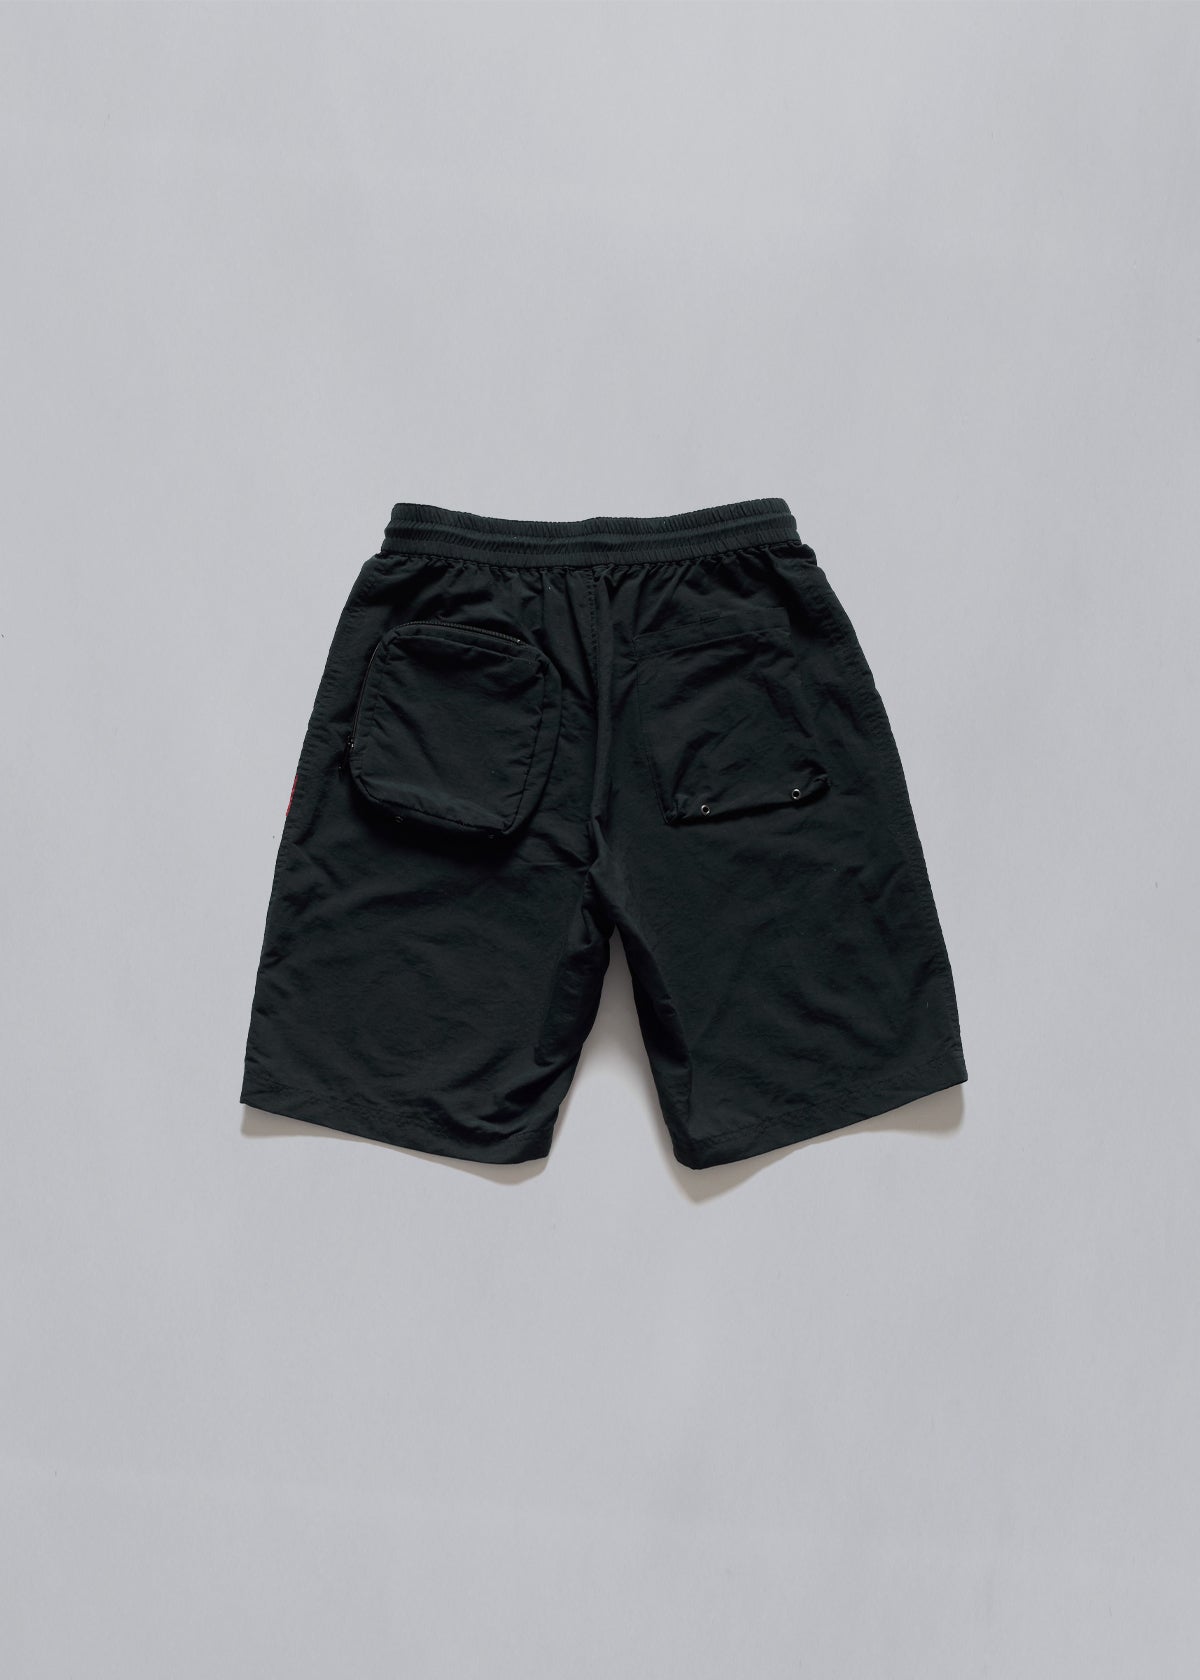 Active Shorts 1990's - Medium - The Archivist Store